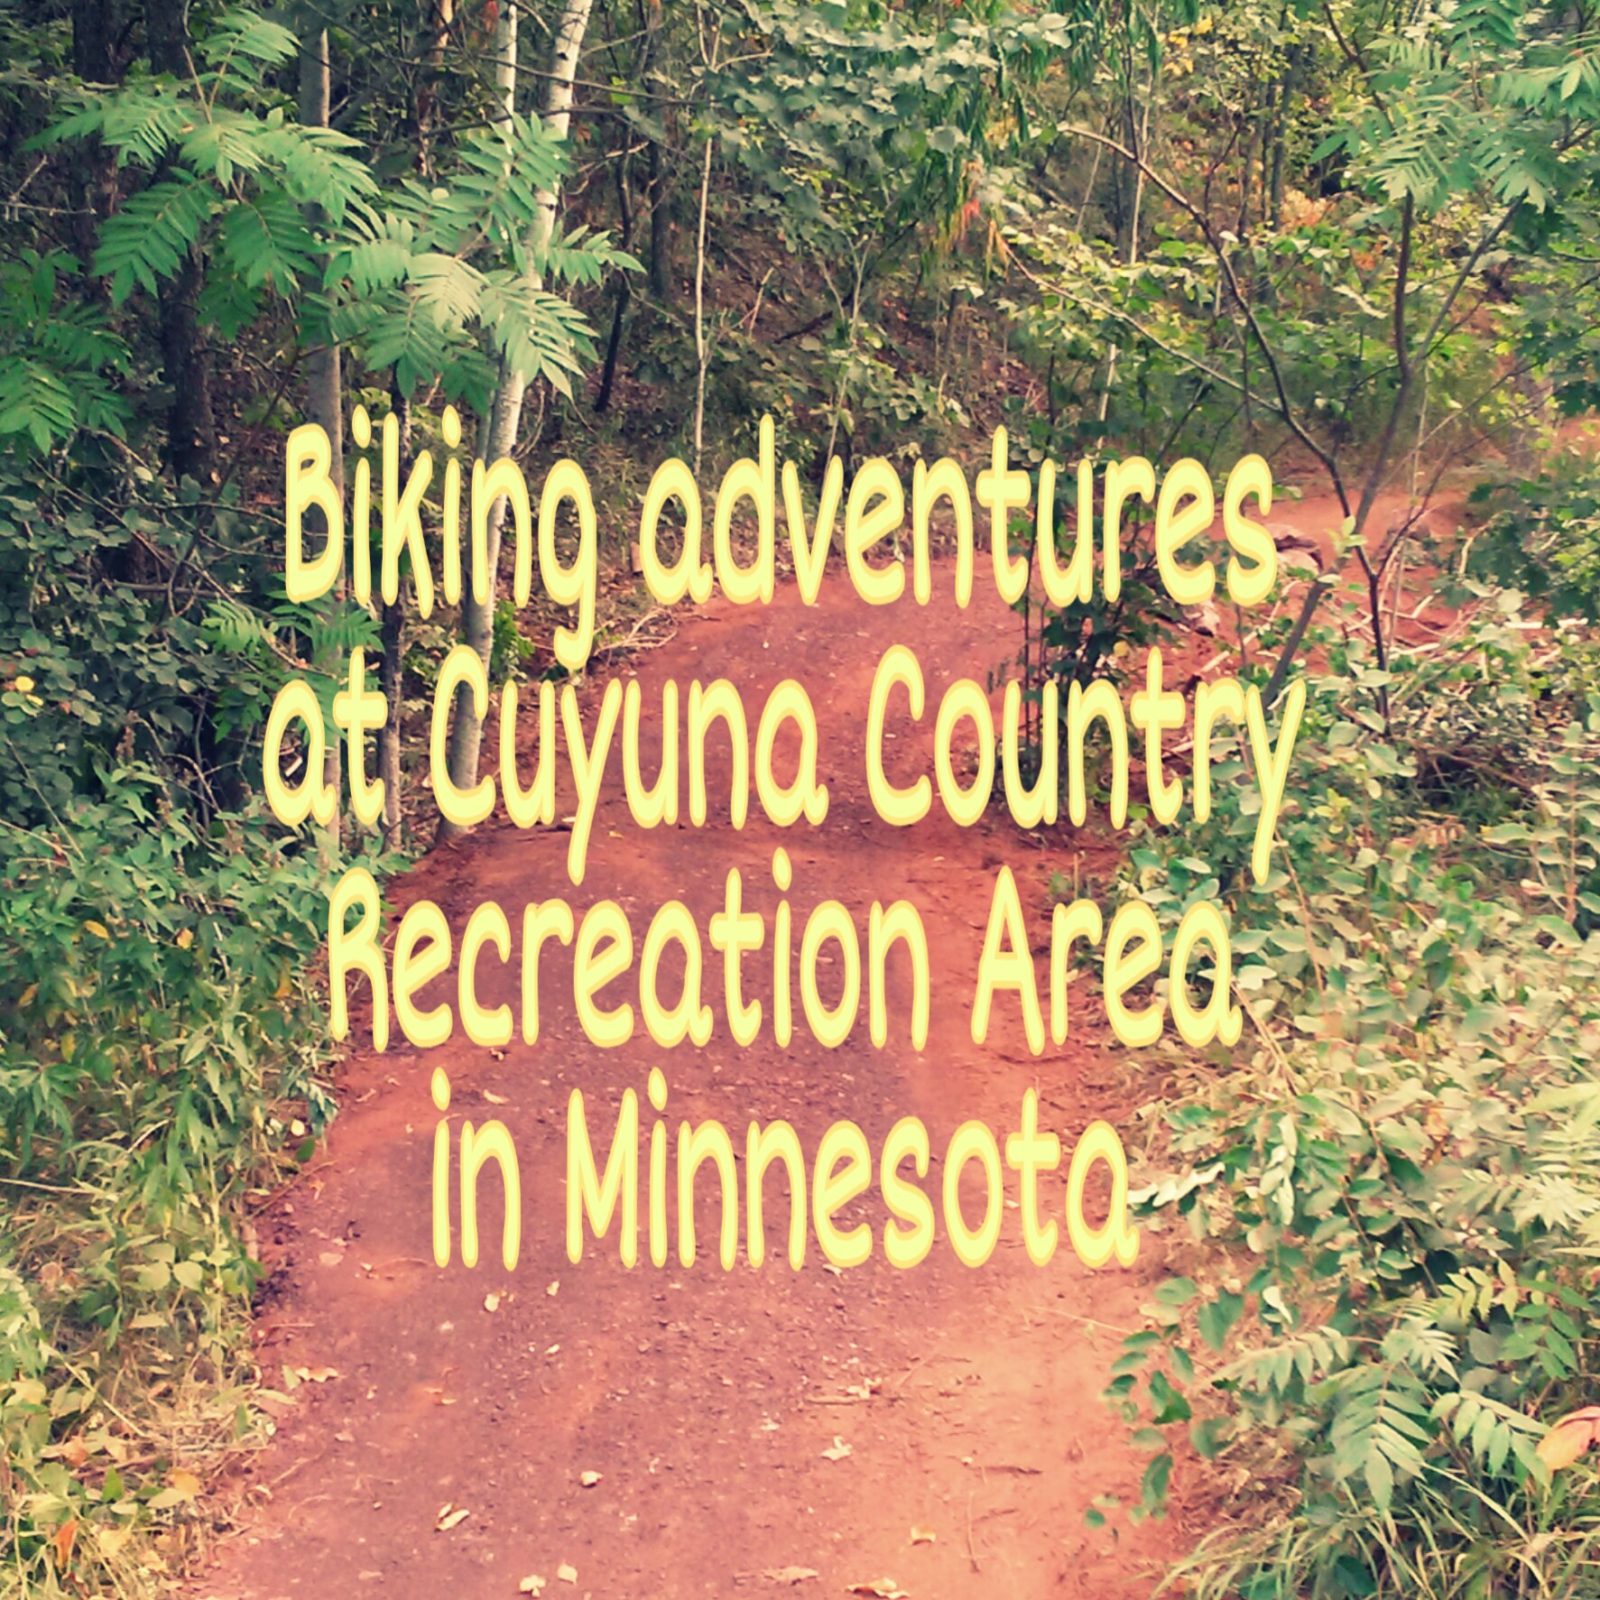 Biking Adventures in Minnesota